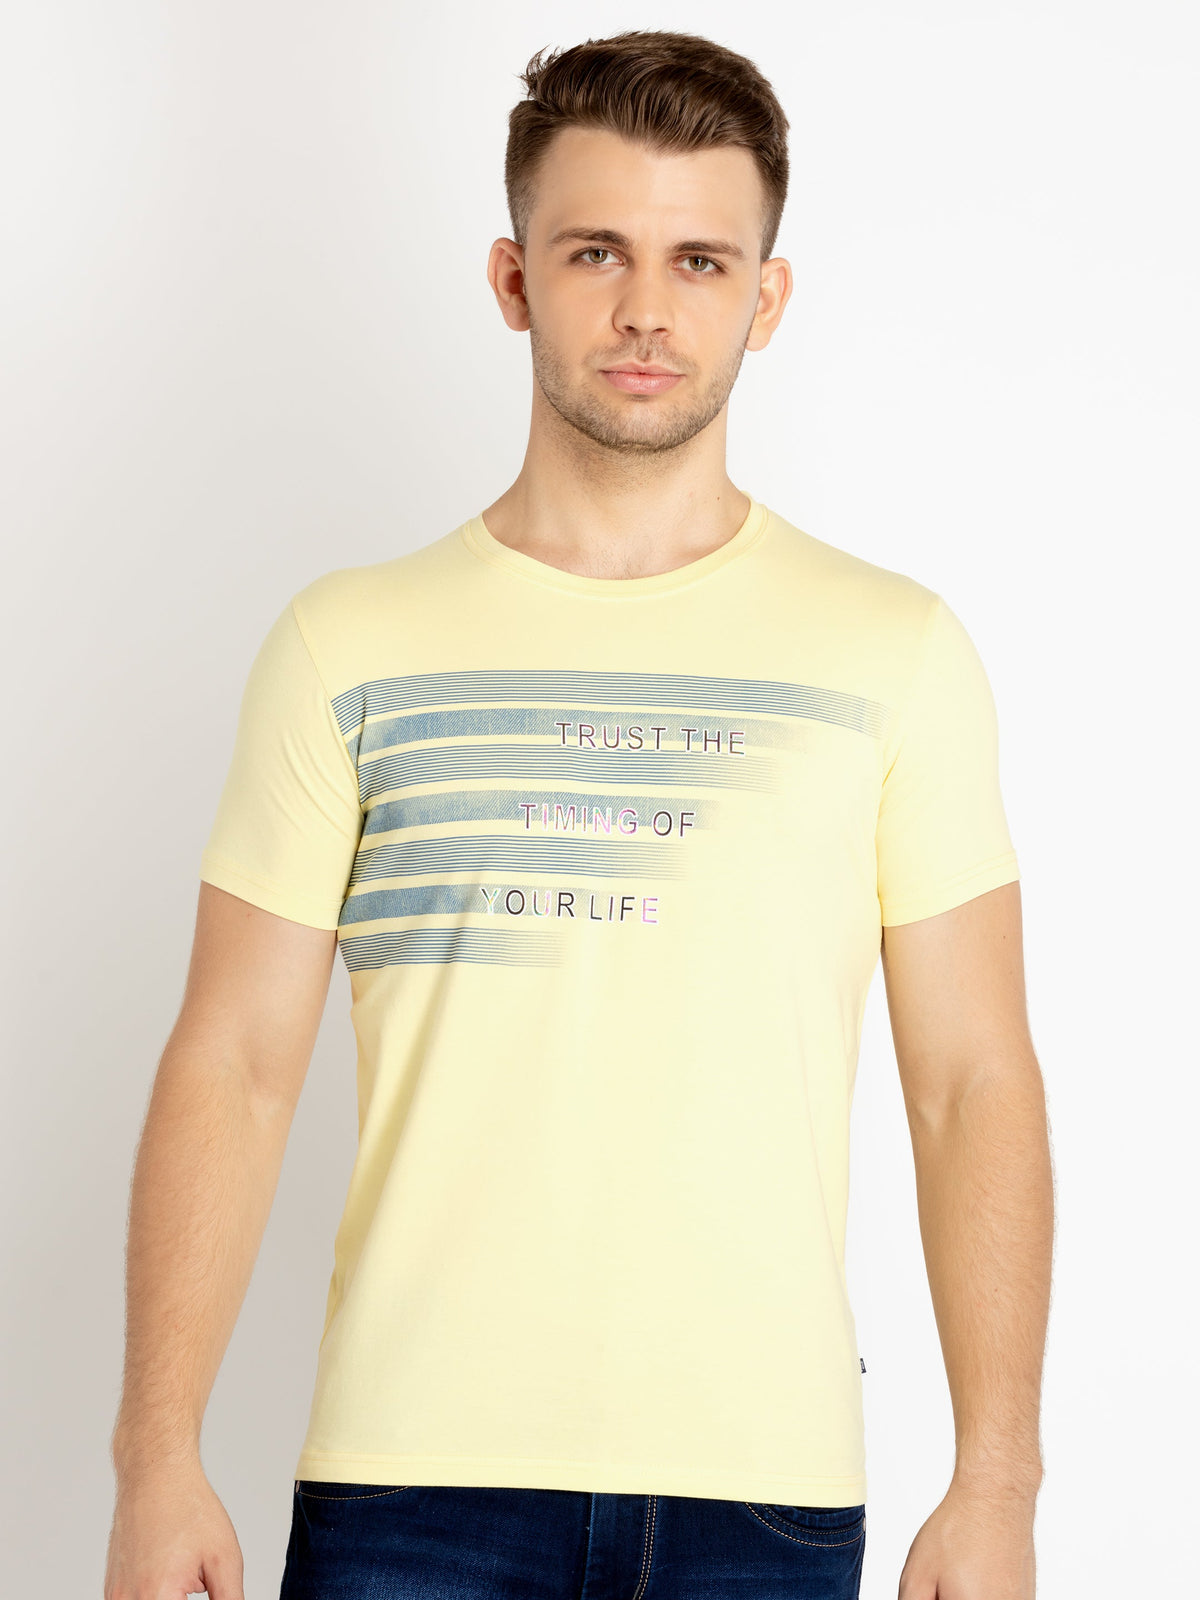 Status Quo |Men's T-shirt - S, M, L, XL, XXL